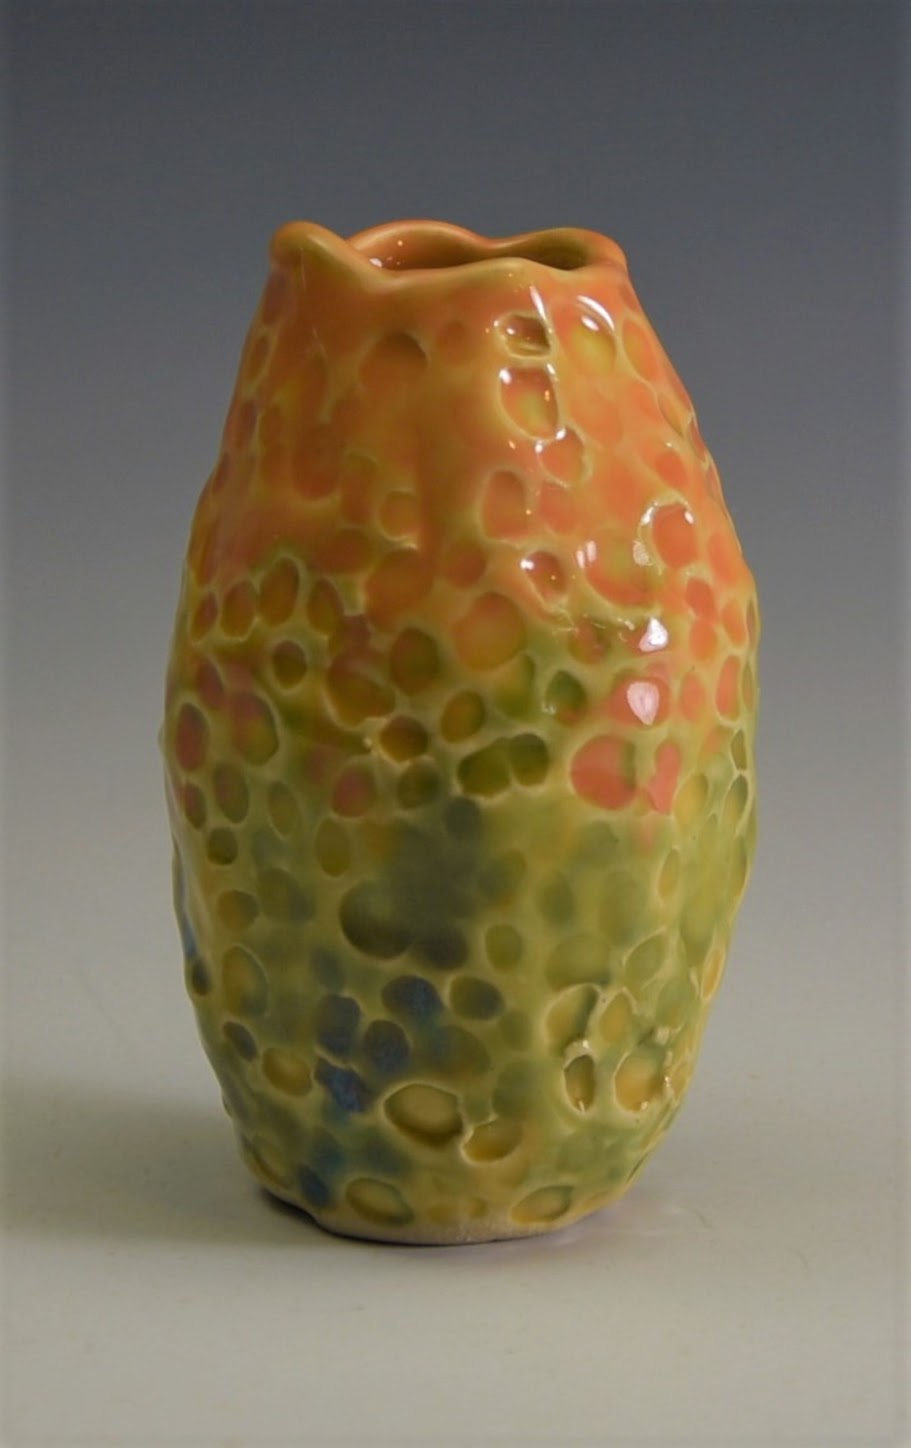 Karen Zaharee Pastel Bud Vase in Marigold